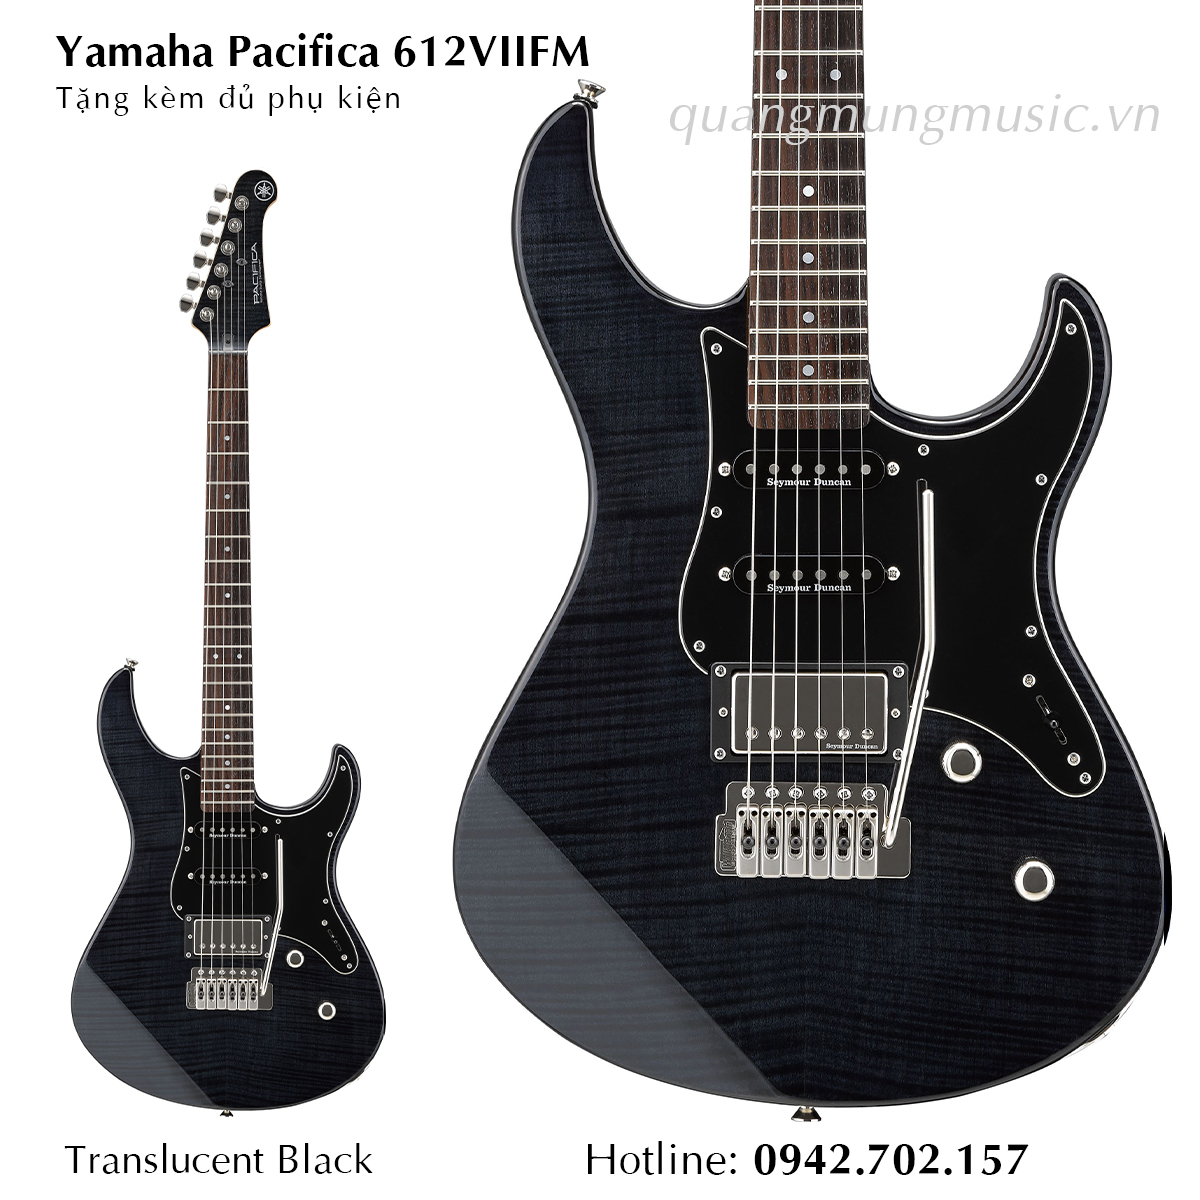 Yamaha Pacifica 612VIIFM-Translucent Black